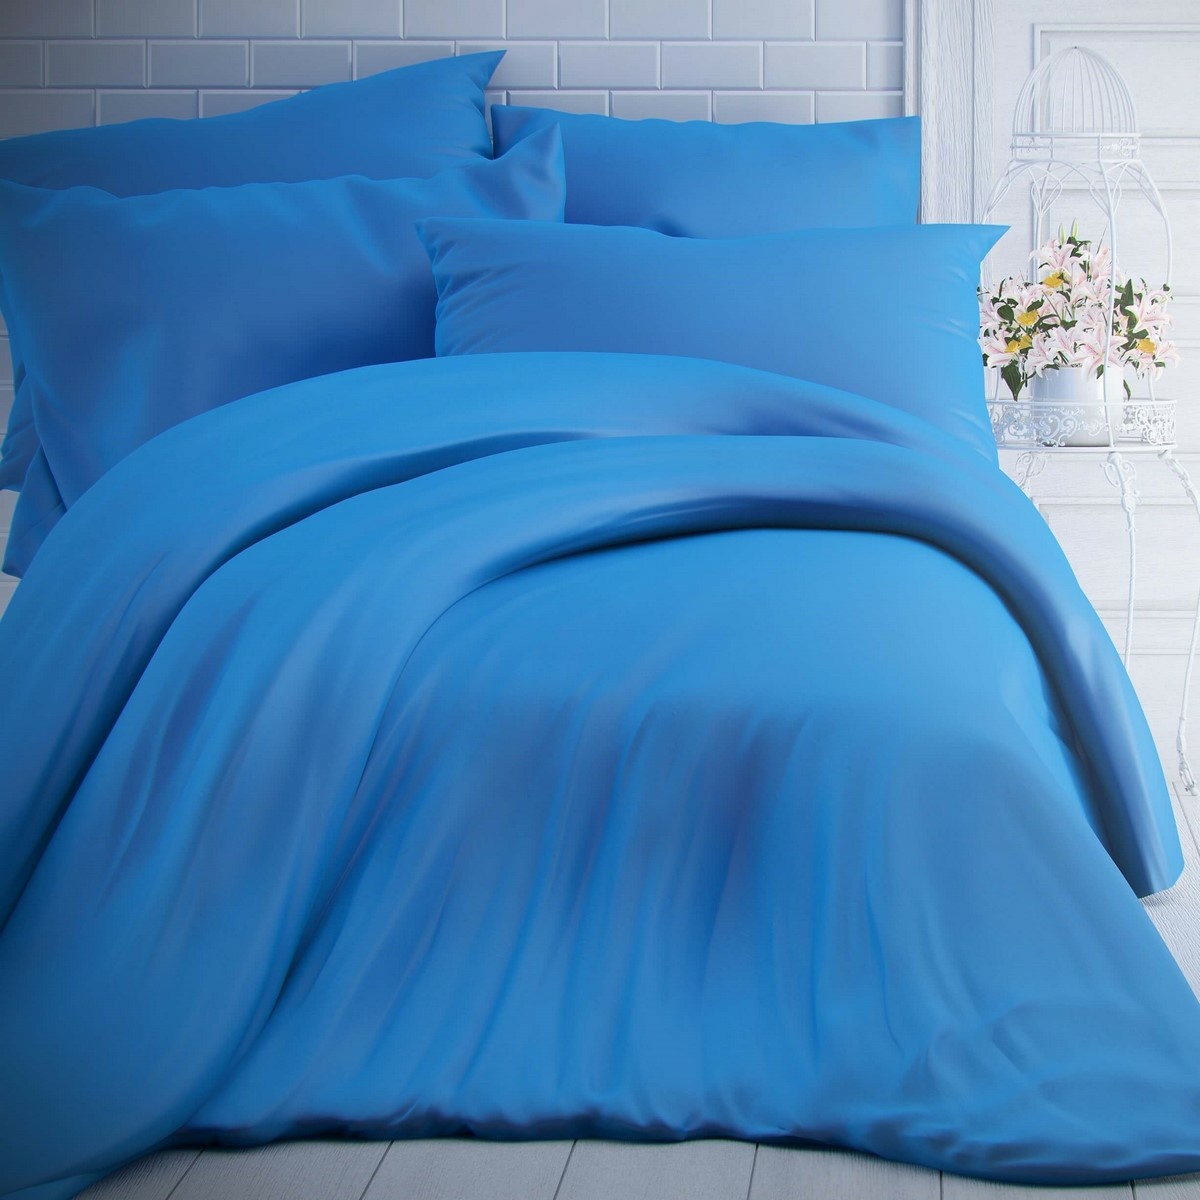 Kvalitex Lenjerie de pat din bumbac albastră, 200 x 200 cm, 2 buc. 70 x 90 cm, 200 x 200 cm, 2 buc. 70 x 90 cm